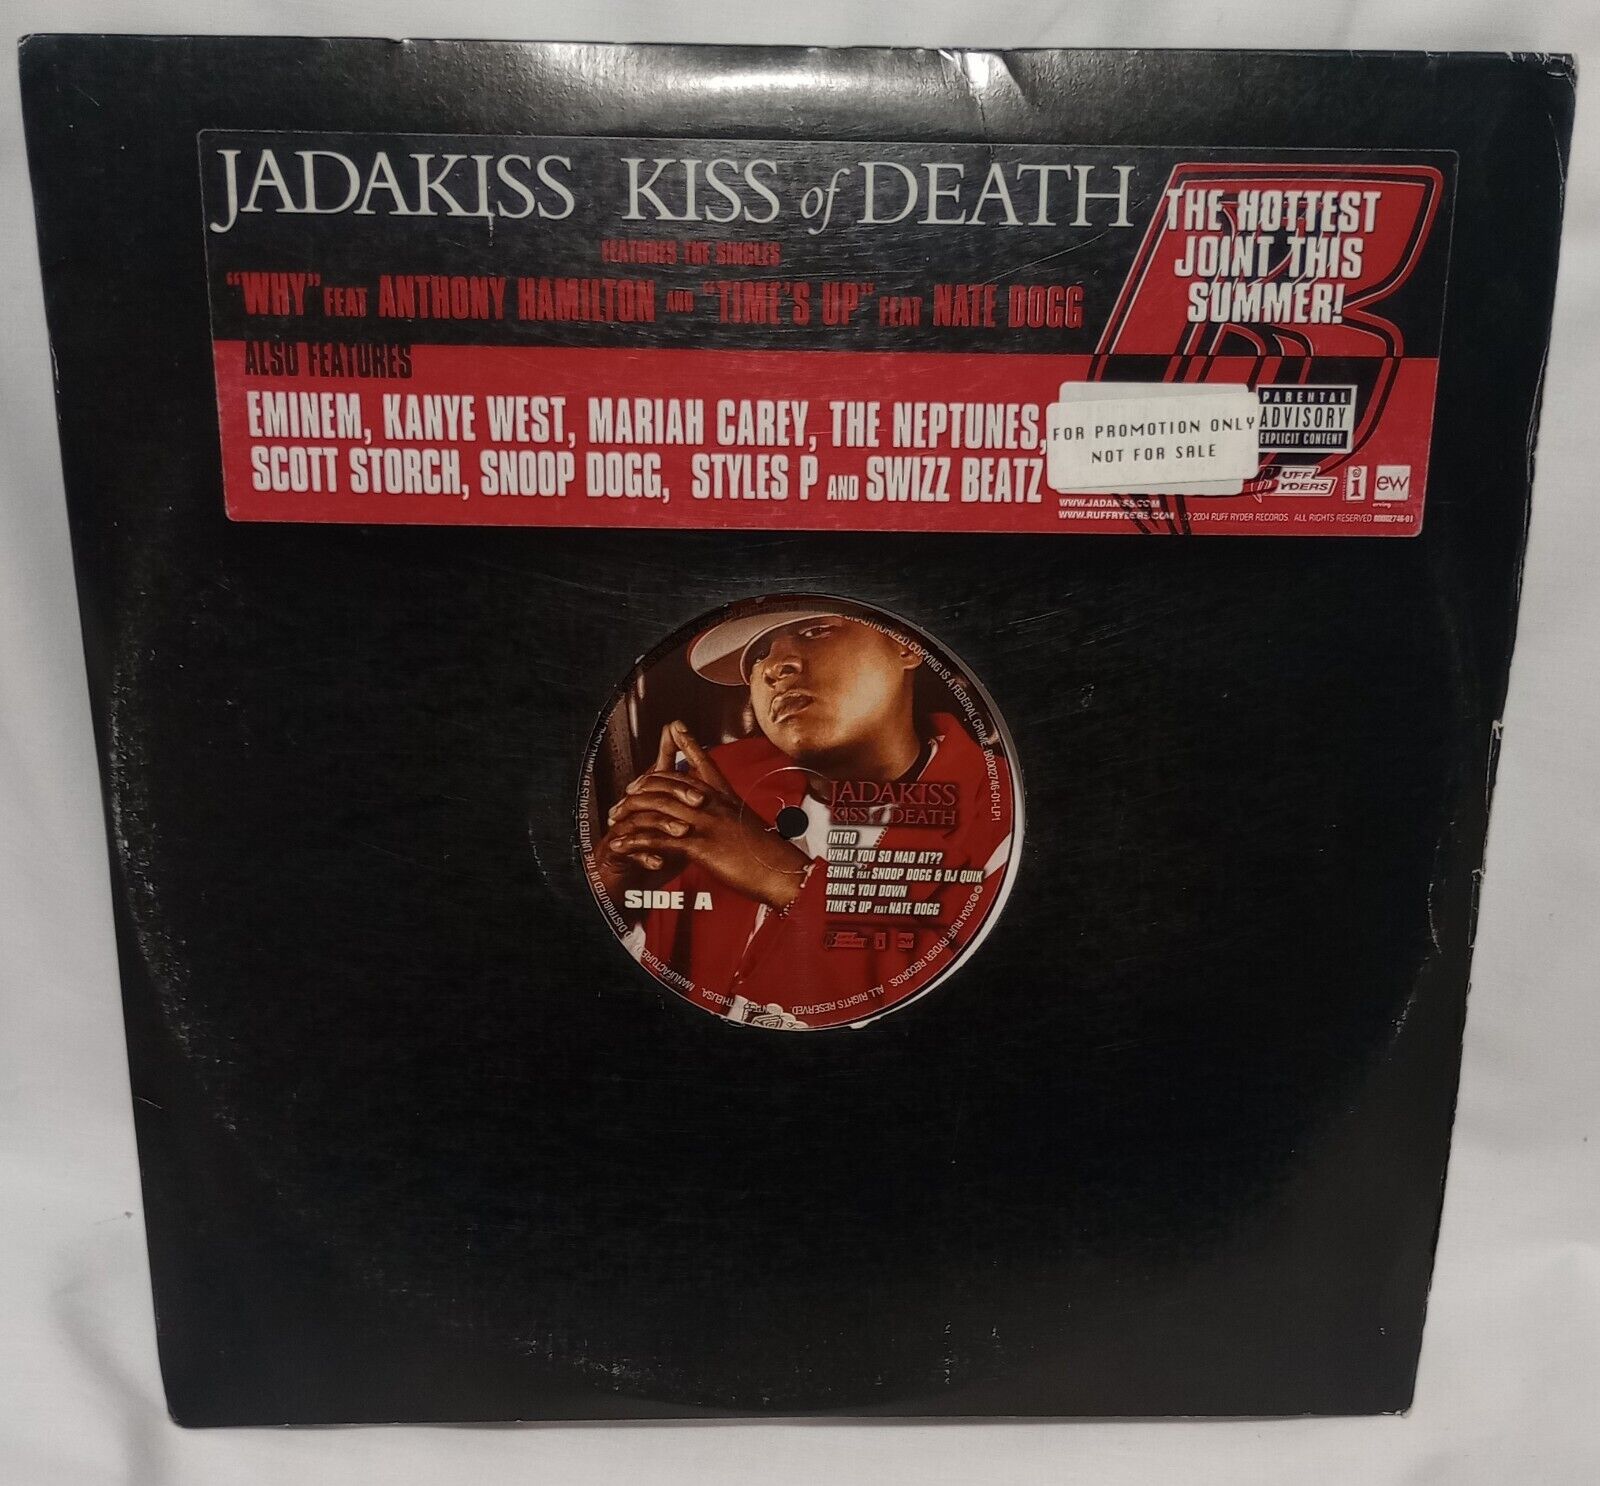 JADAKISS, KISS OF DEATH, 2004 2X LP Record PROMO, Eminem, Kanye, Lox, Explicit 